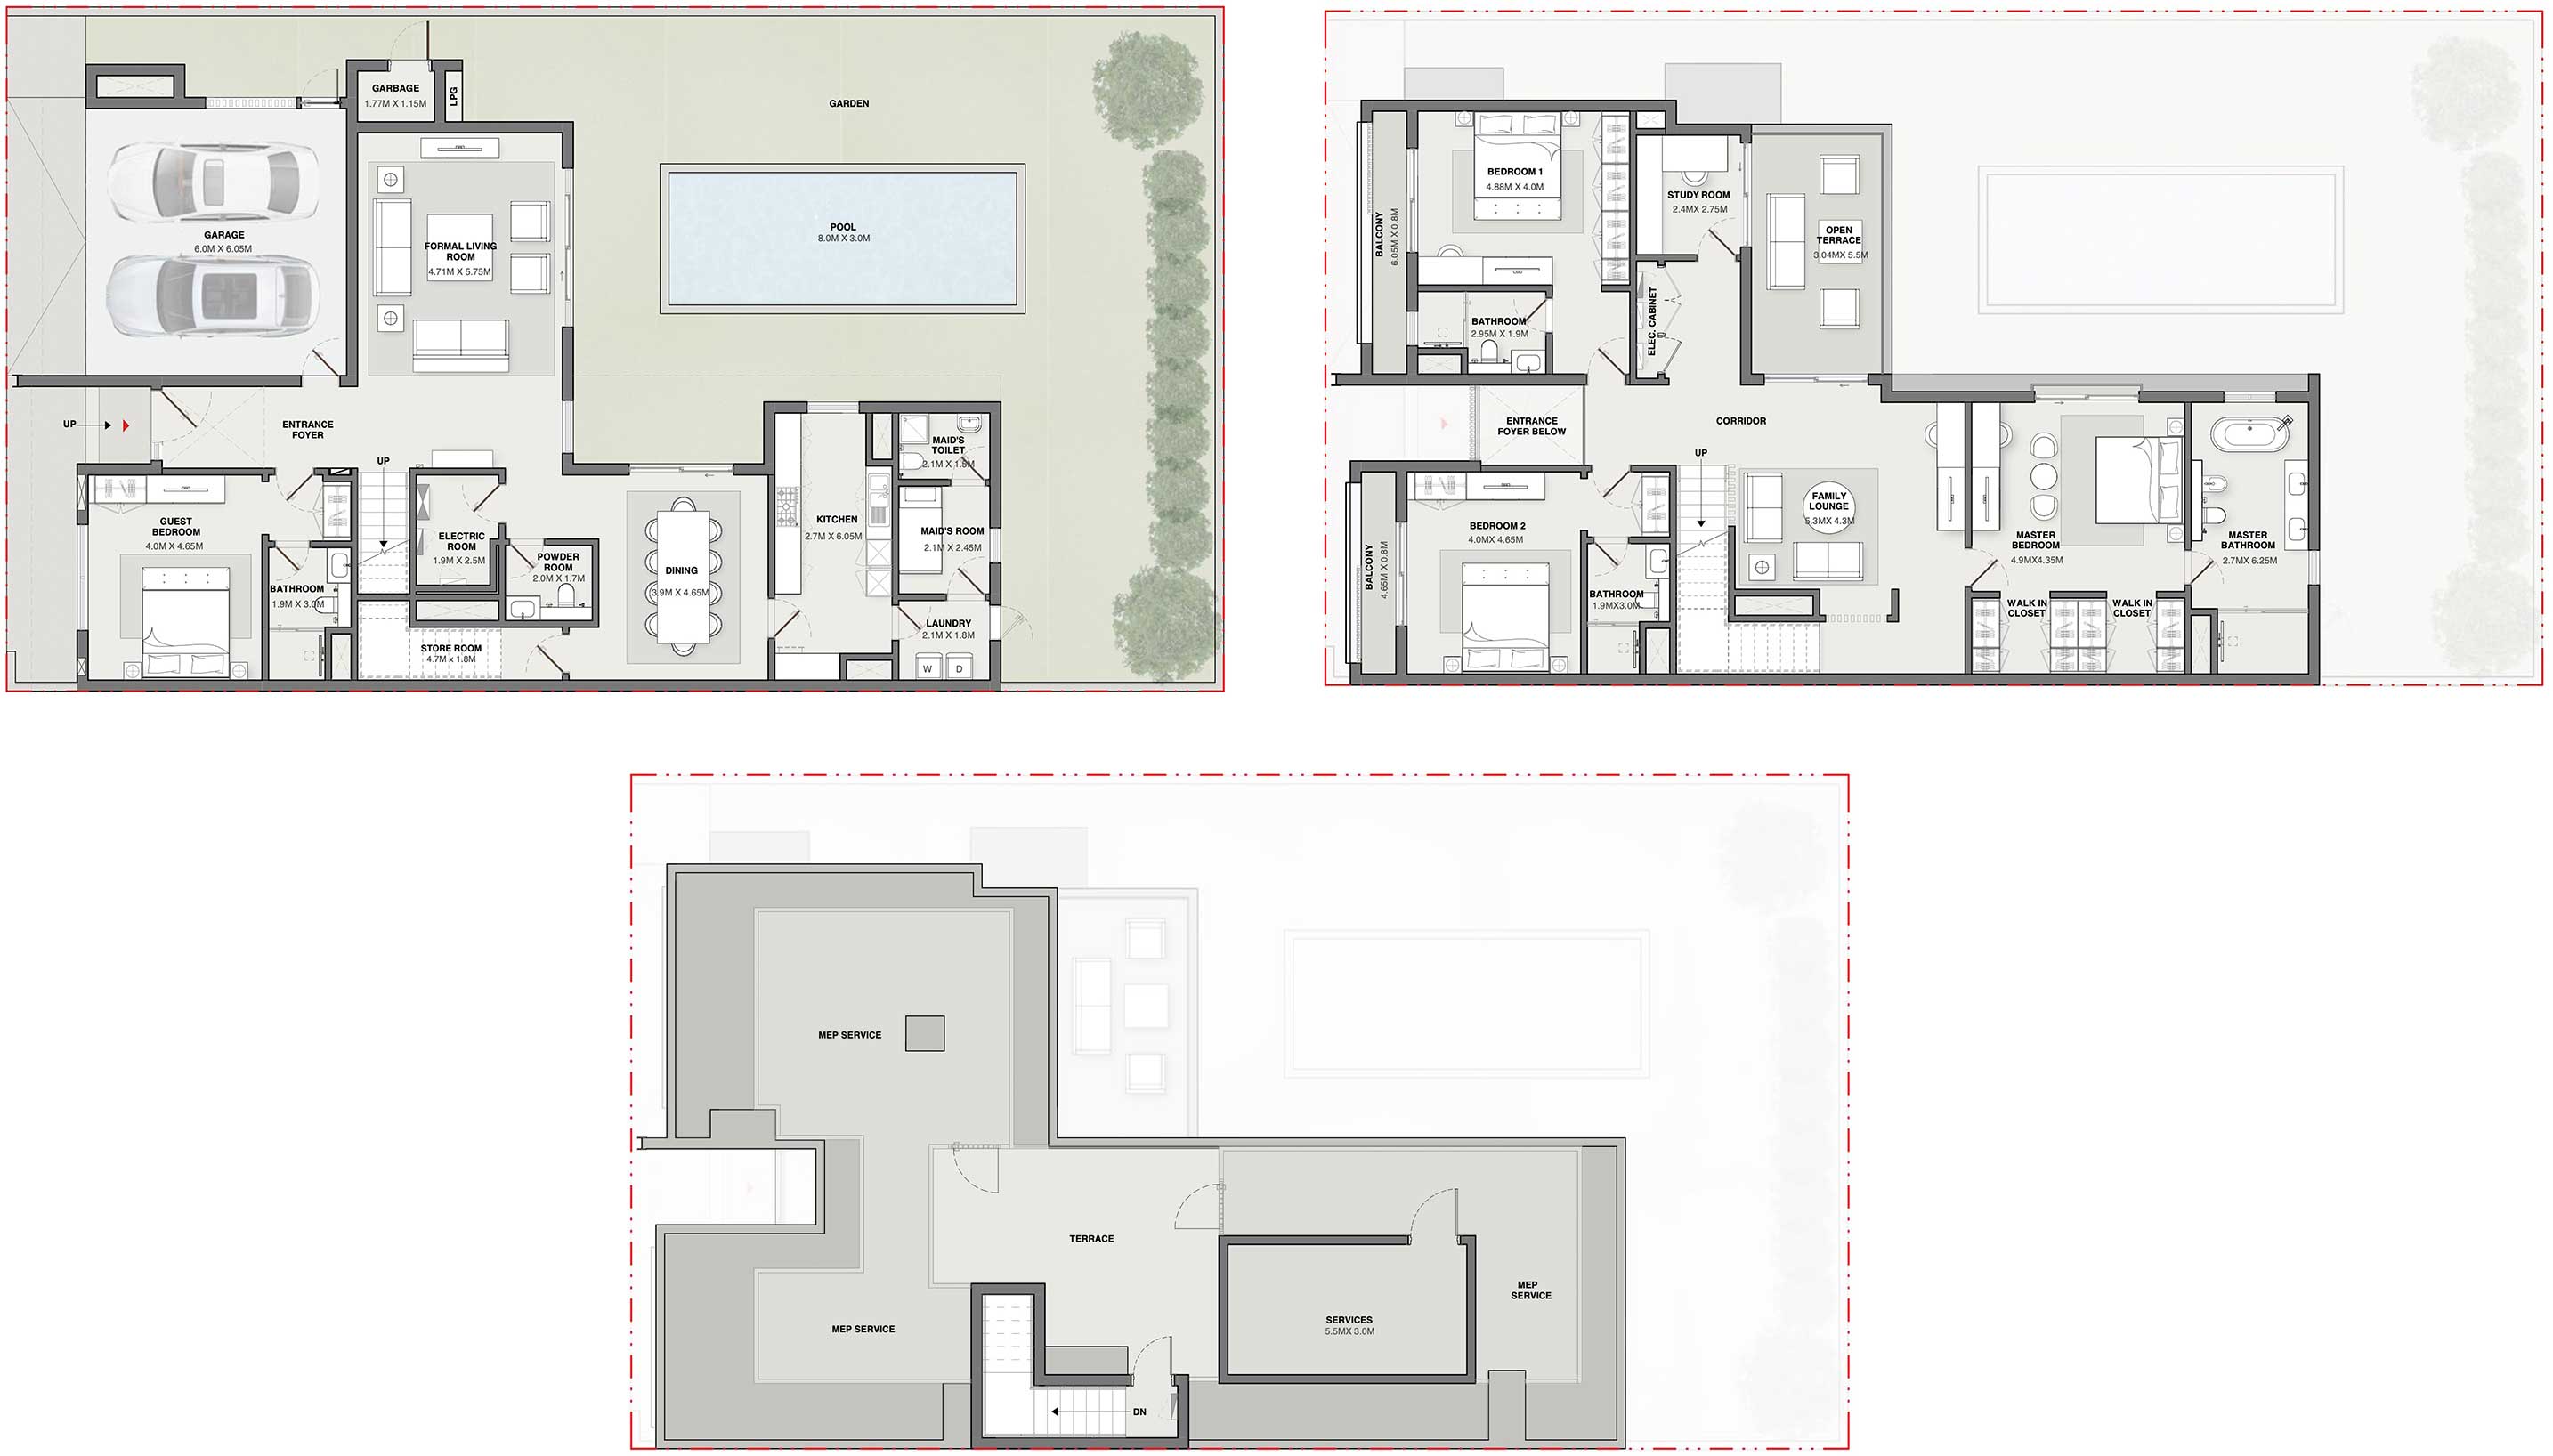 4 Bedroom Villas Floor Plan